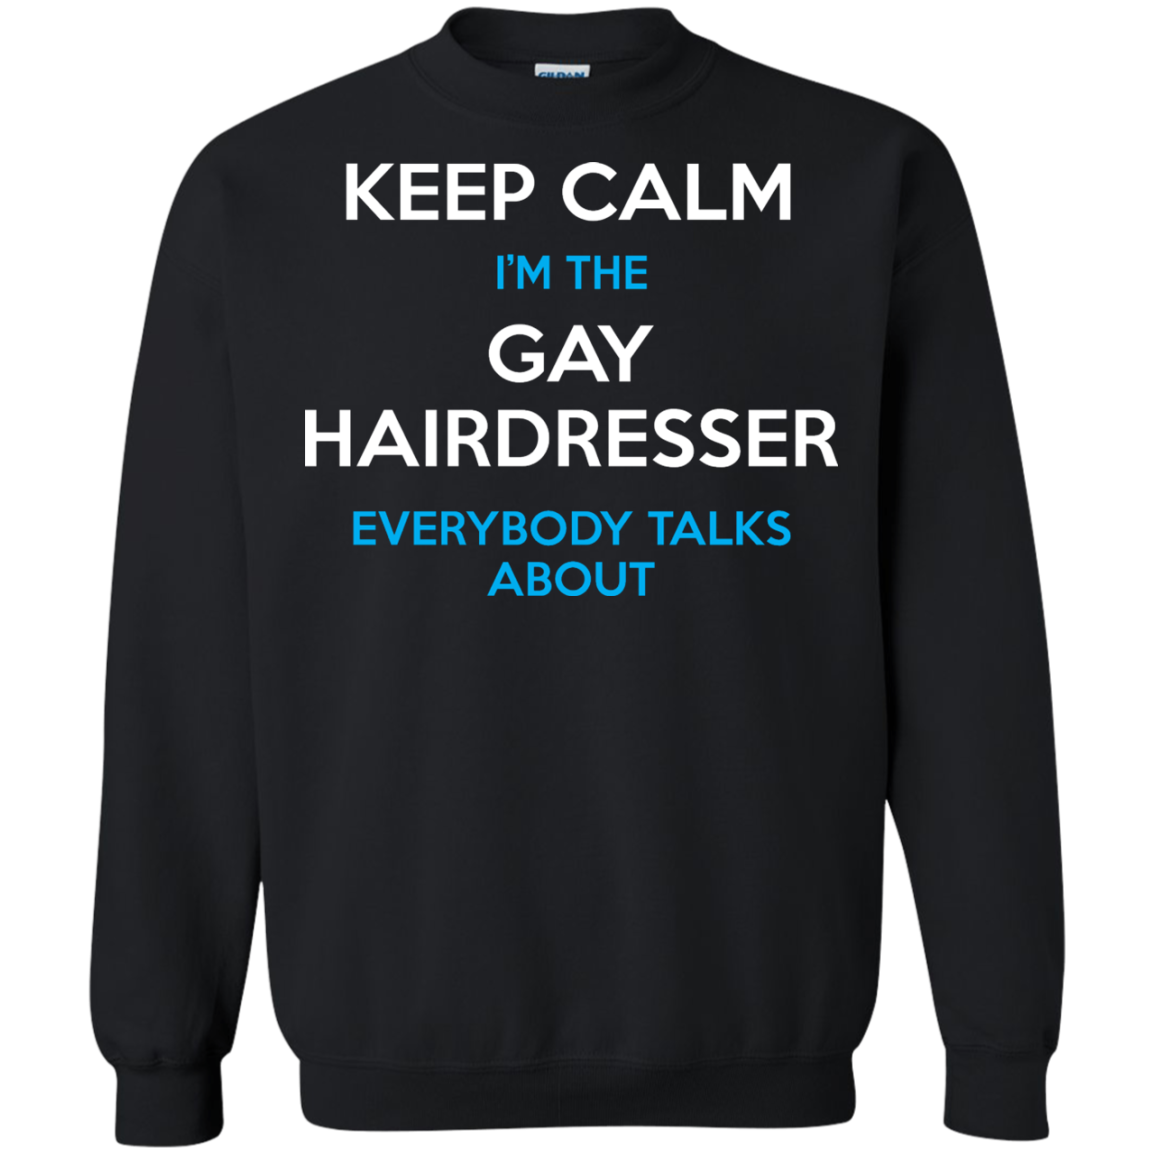 Keep Calm I'm The Gay Hairdresser black Sweatshirt for Men & Women